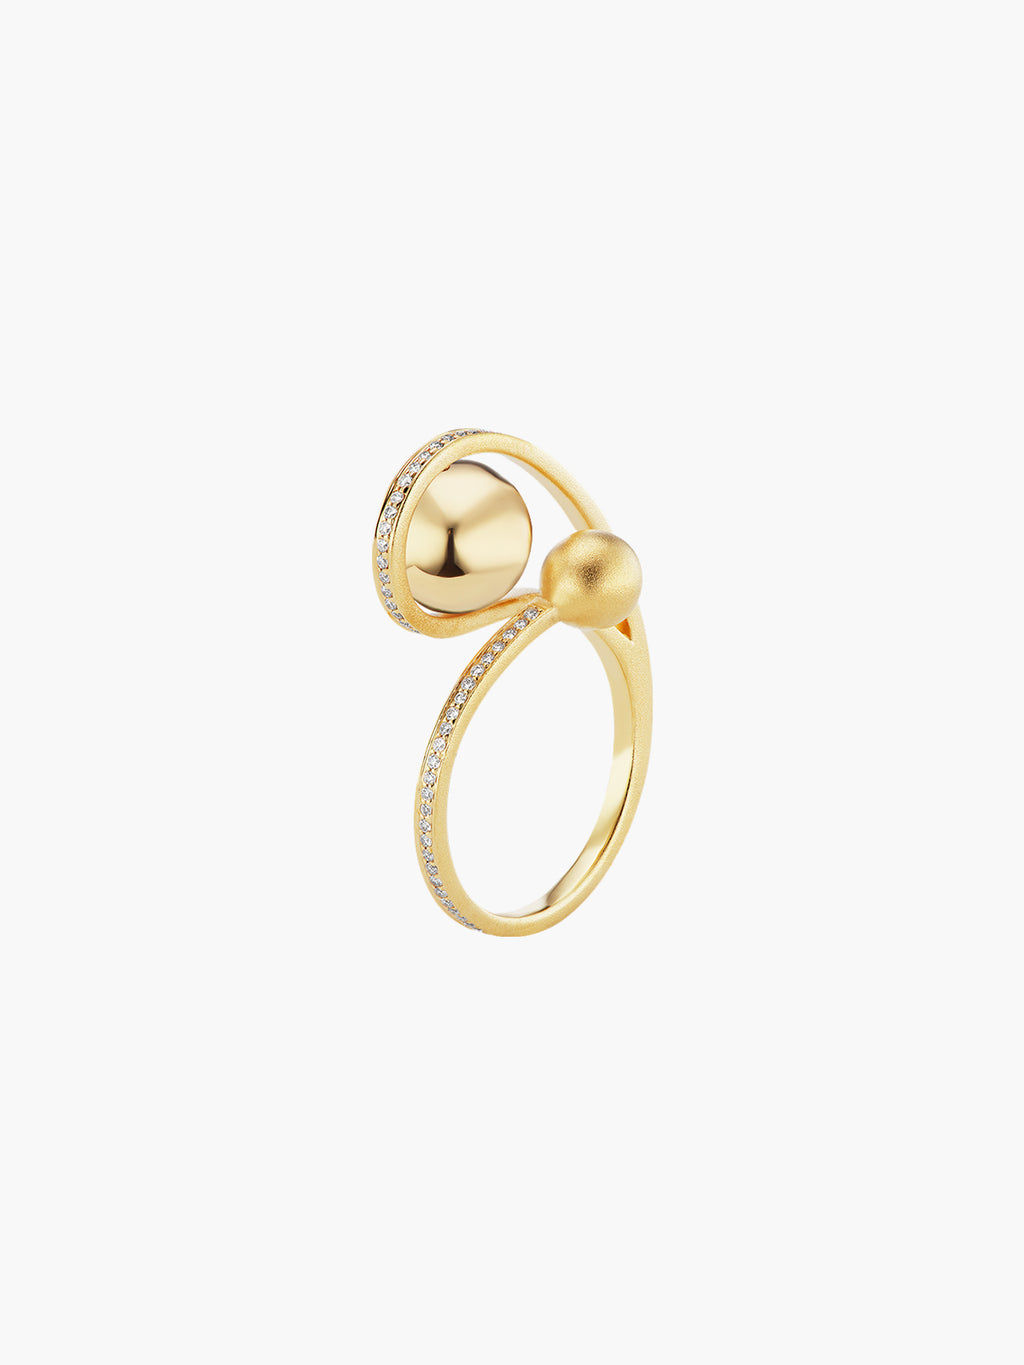 Boule D'Or Lariat Ring | High Polish - Fashionkind